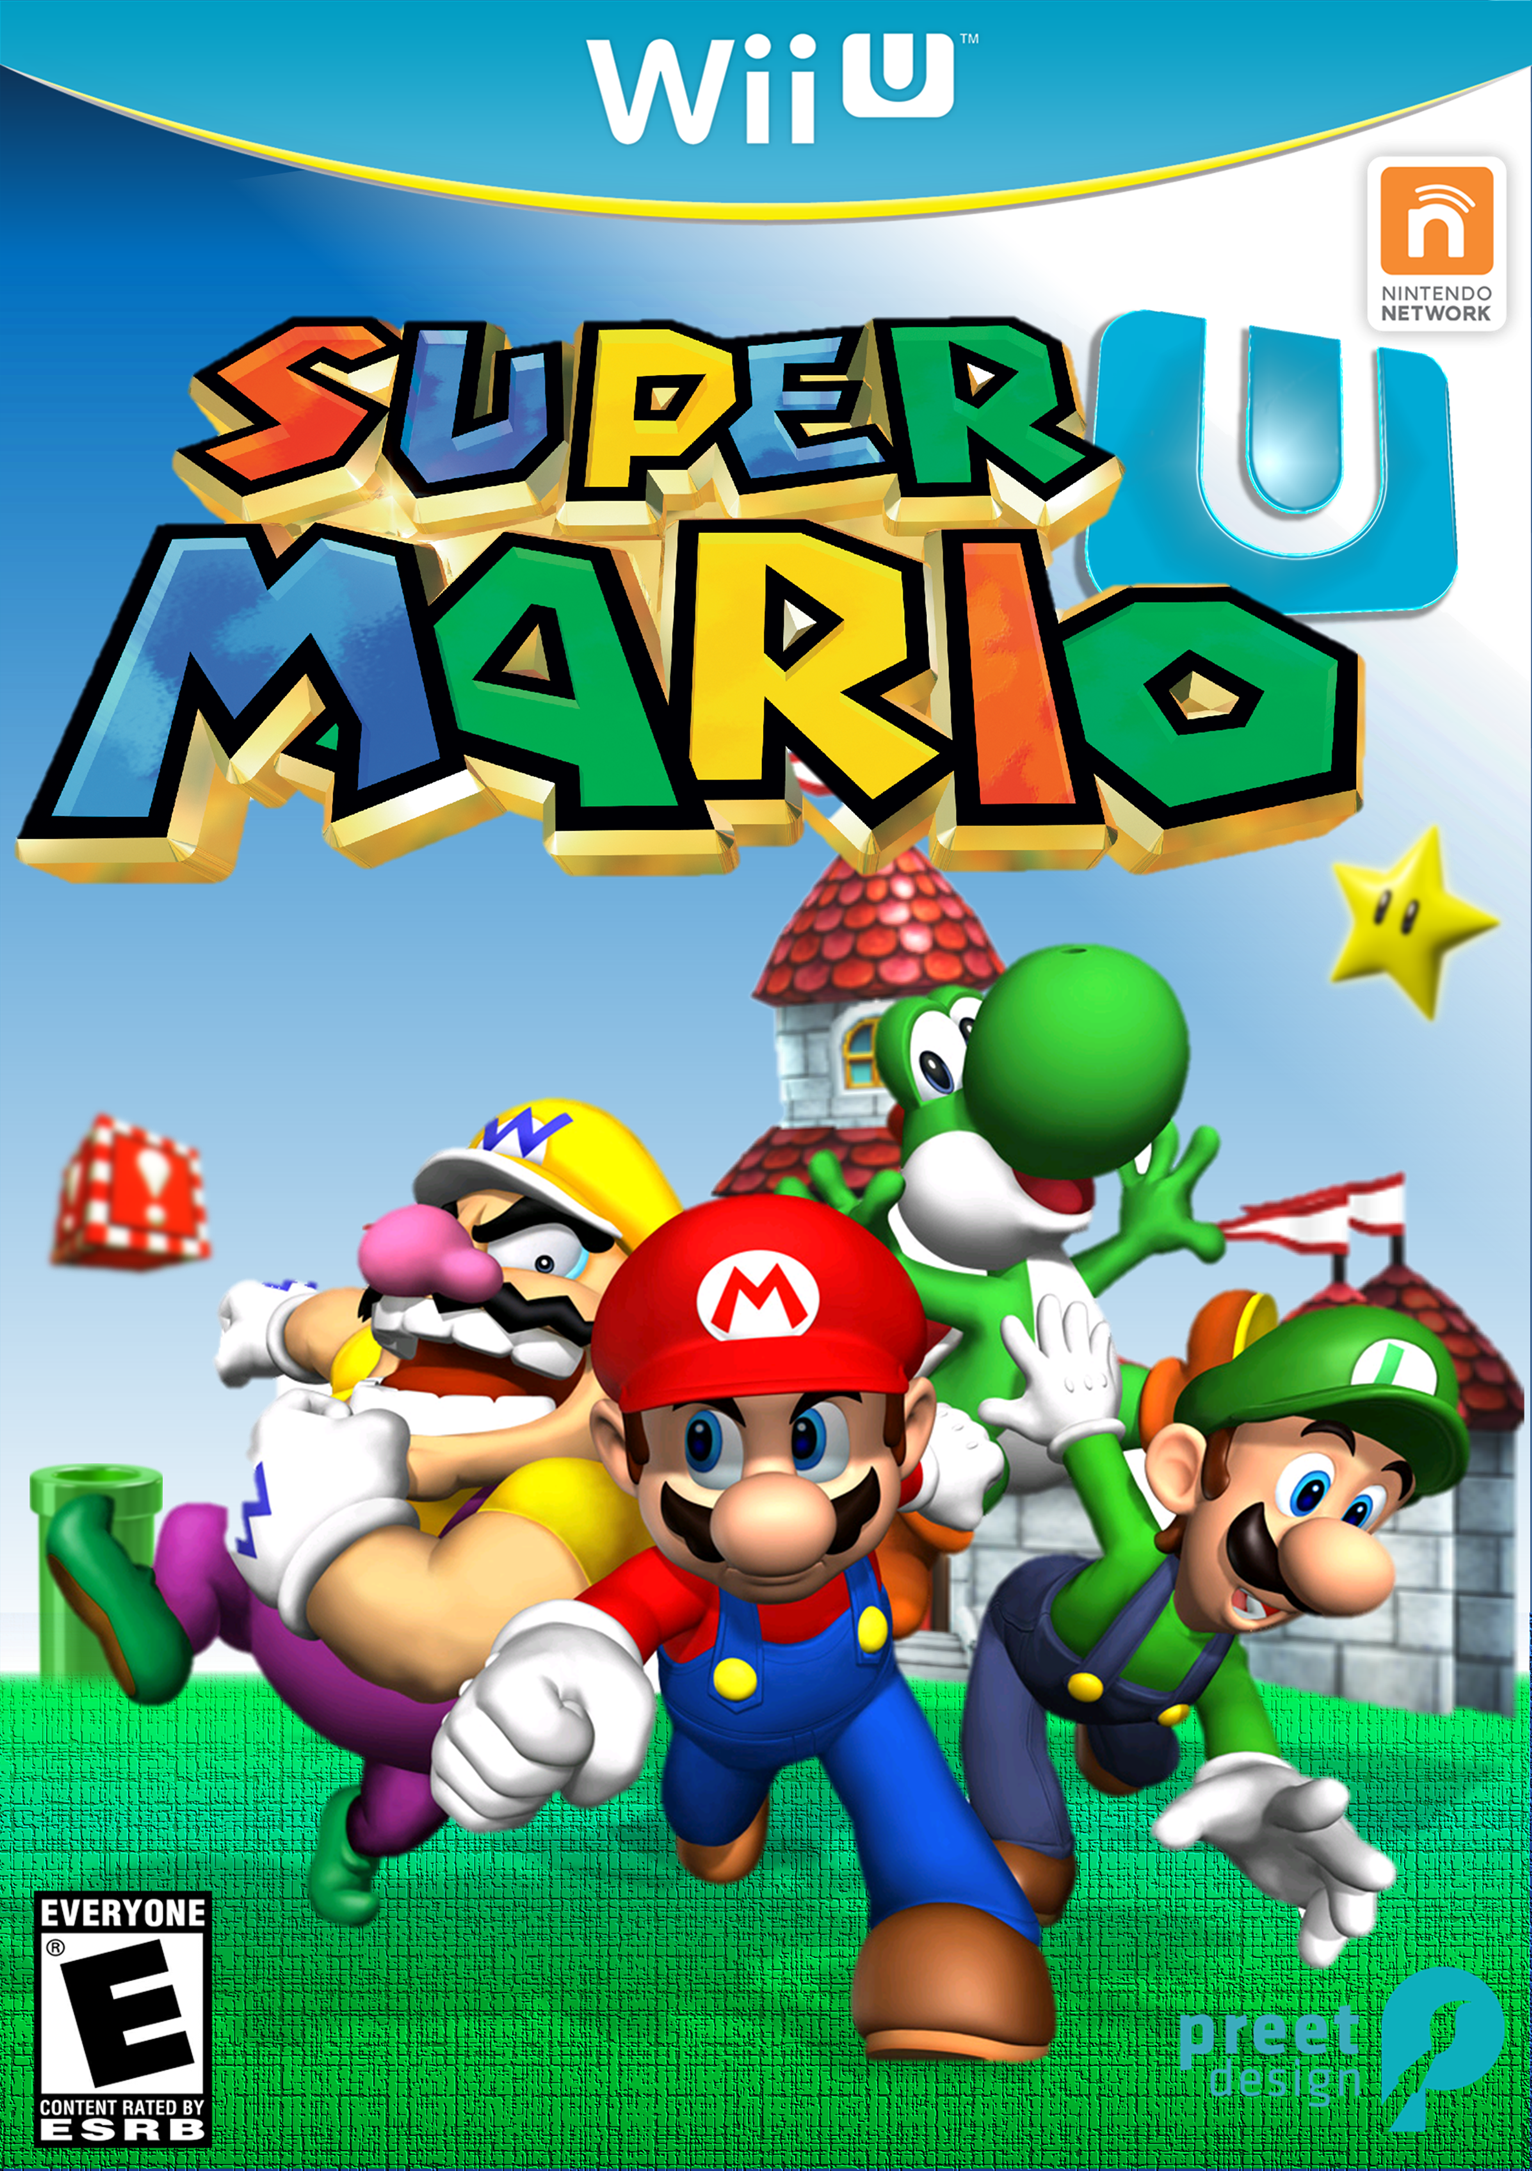 Nintendo 64 mario. Марио Нинтендо 64. Super Mario 64 Nintendo 64. Nintendo 64 Mario 64 диск. Super Mario 64 обложка.